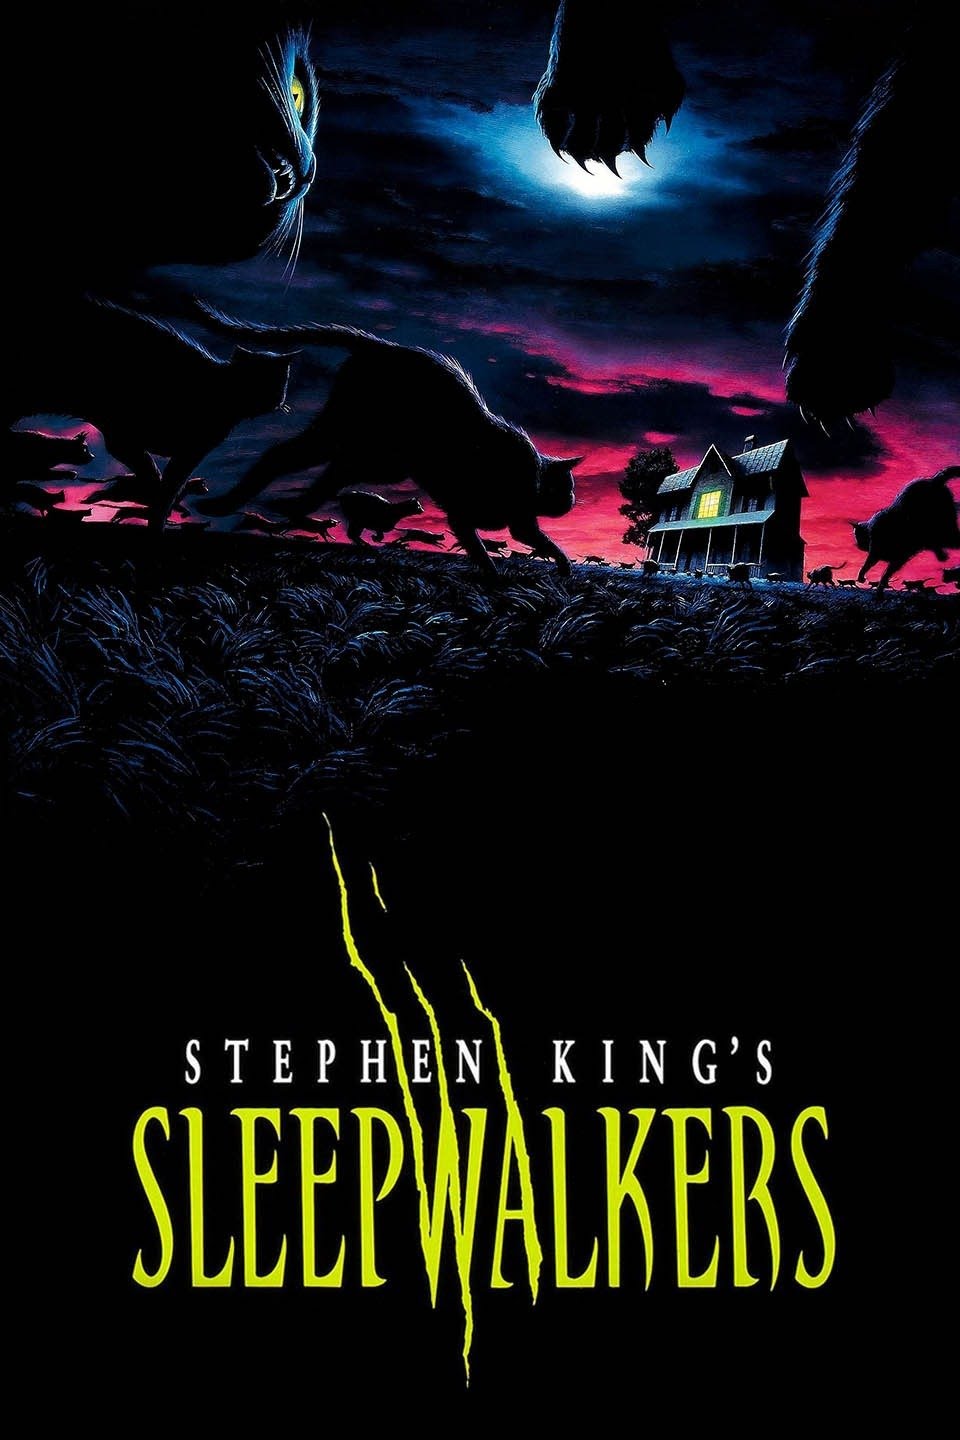 [MINI-HD] Sleepwalkers (1992) ดูดชีพผีพันธุ์สุดท้าย [1080p] [พากย์ไทย 5.1 + เสียงอังกฤษ 2.0] [บรรยายไทย + อังกฤษ] [เสียงไทย + ซับไทย] [DOSYAUPLOAD]